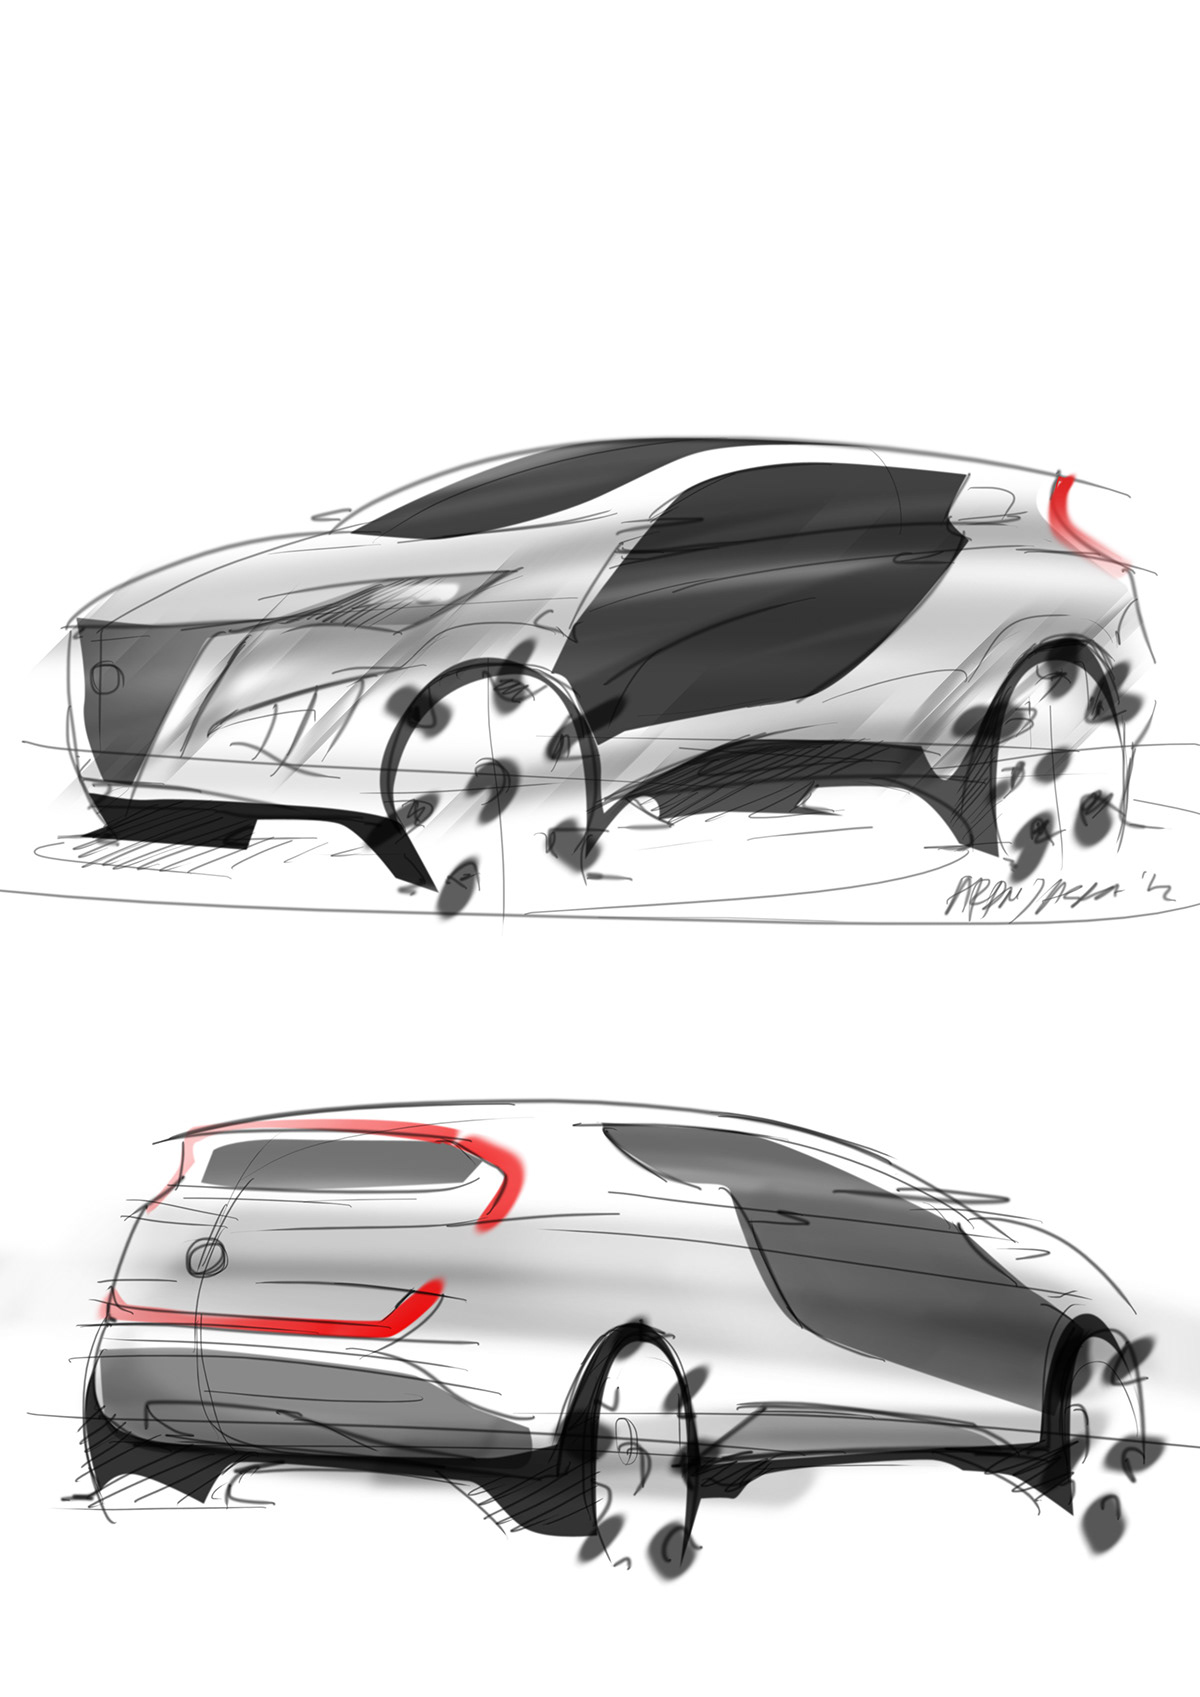 volkswagen VW suv concept sketch